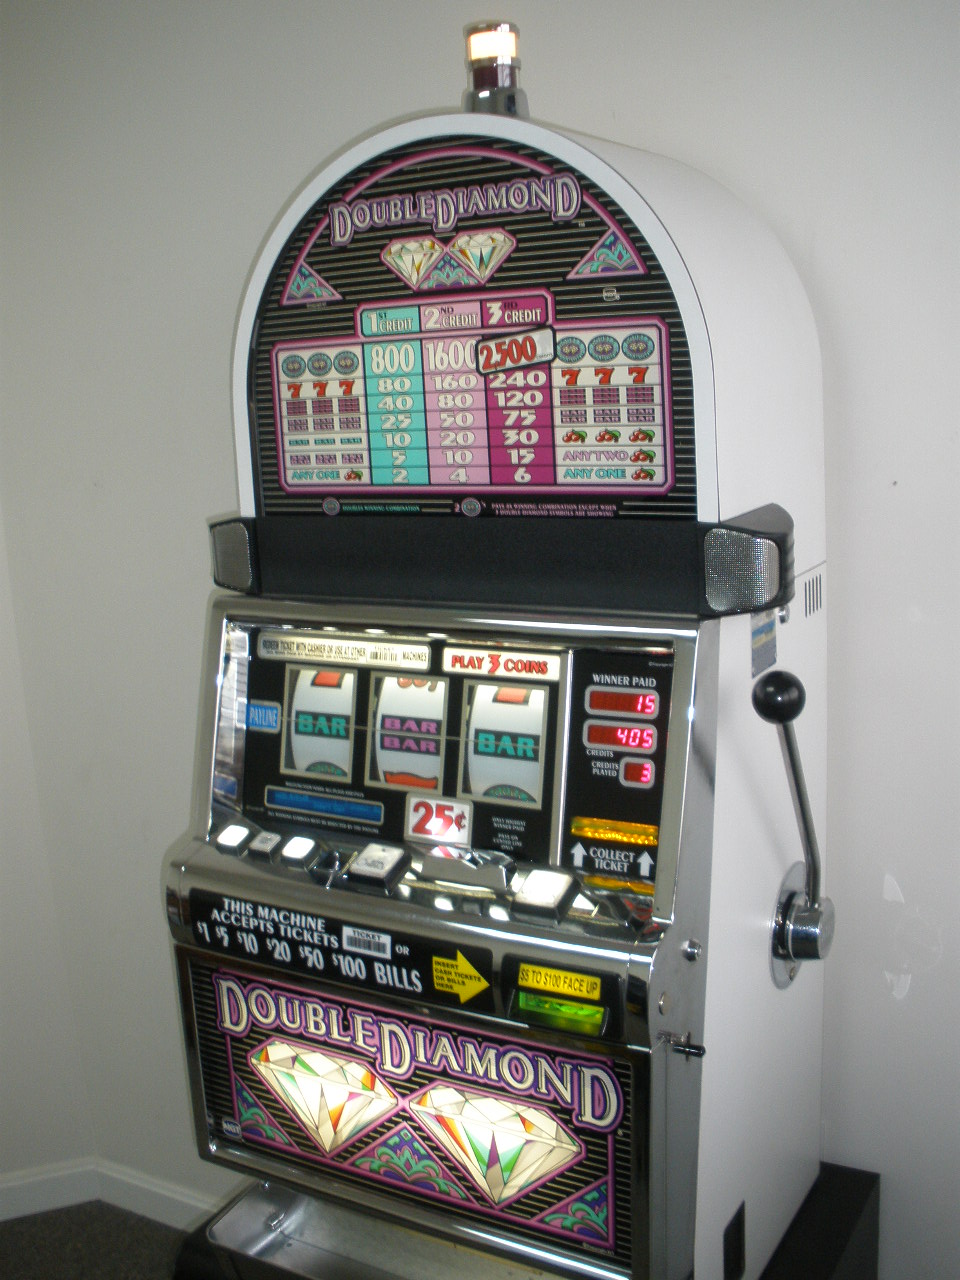 Triple Double Diamond Free Games IGT Slot machine